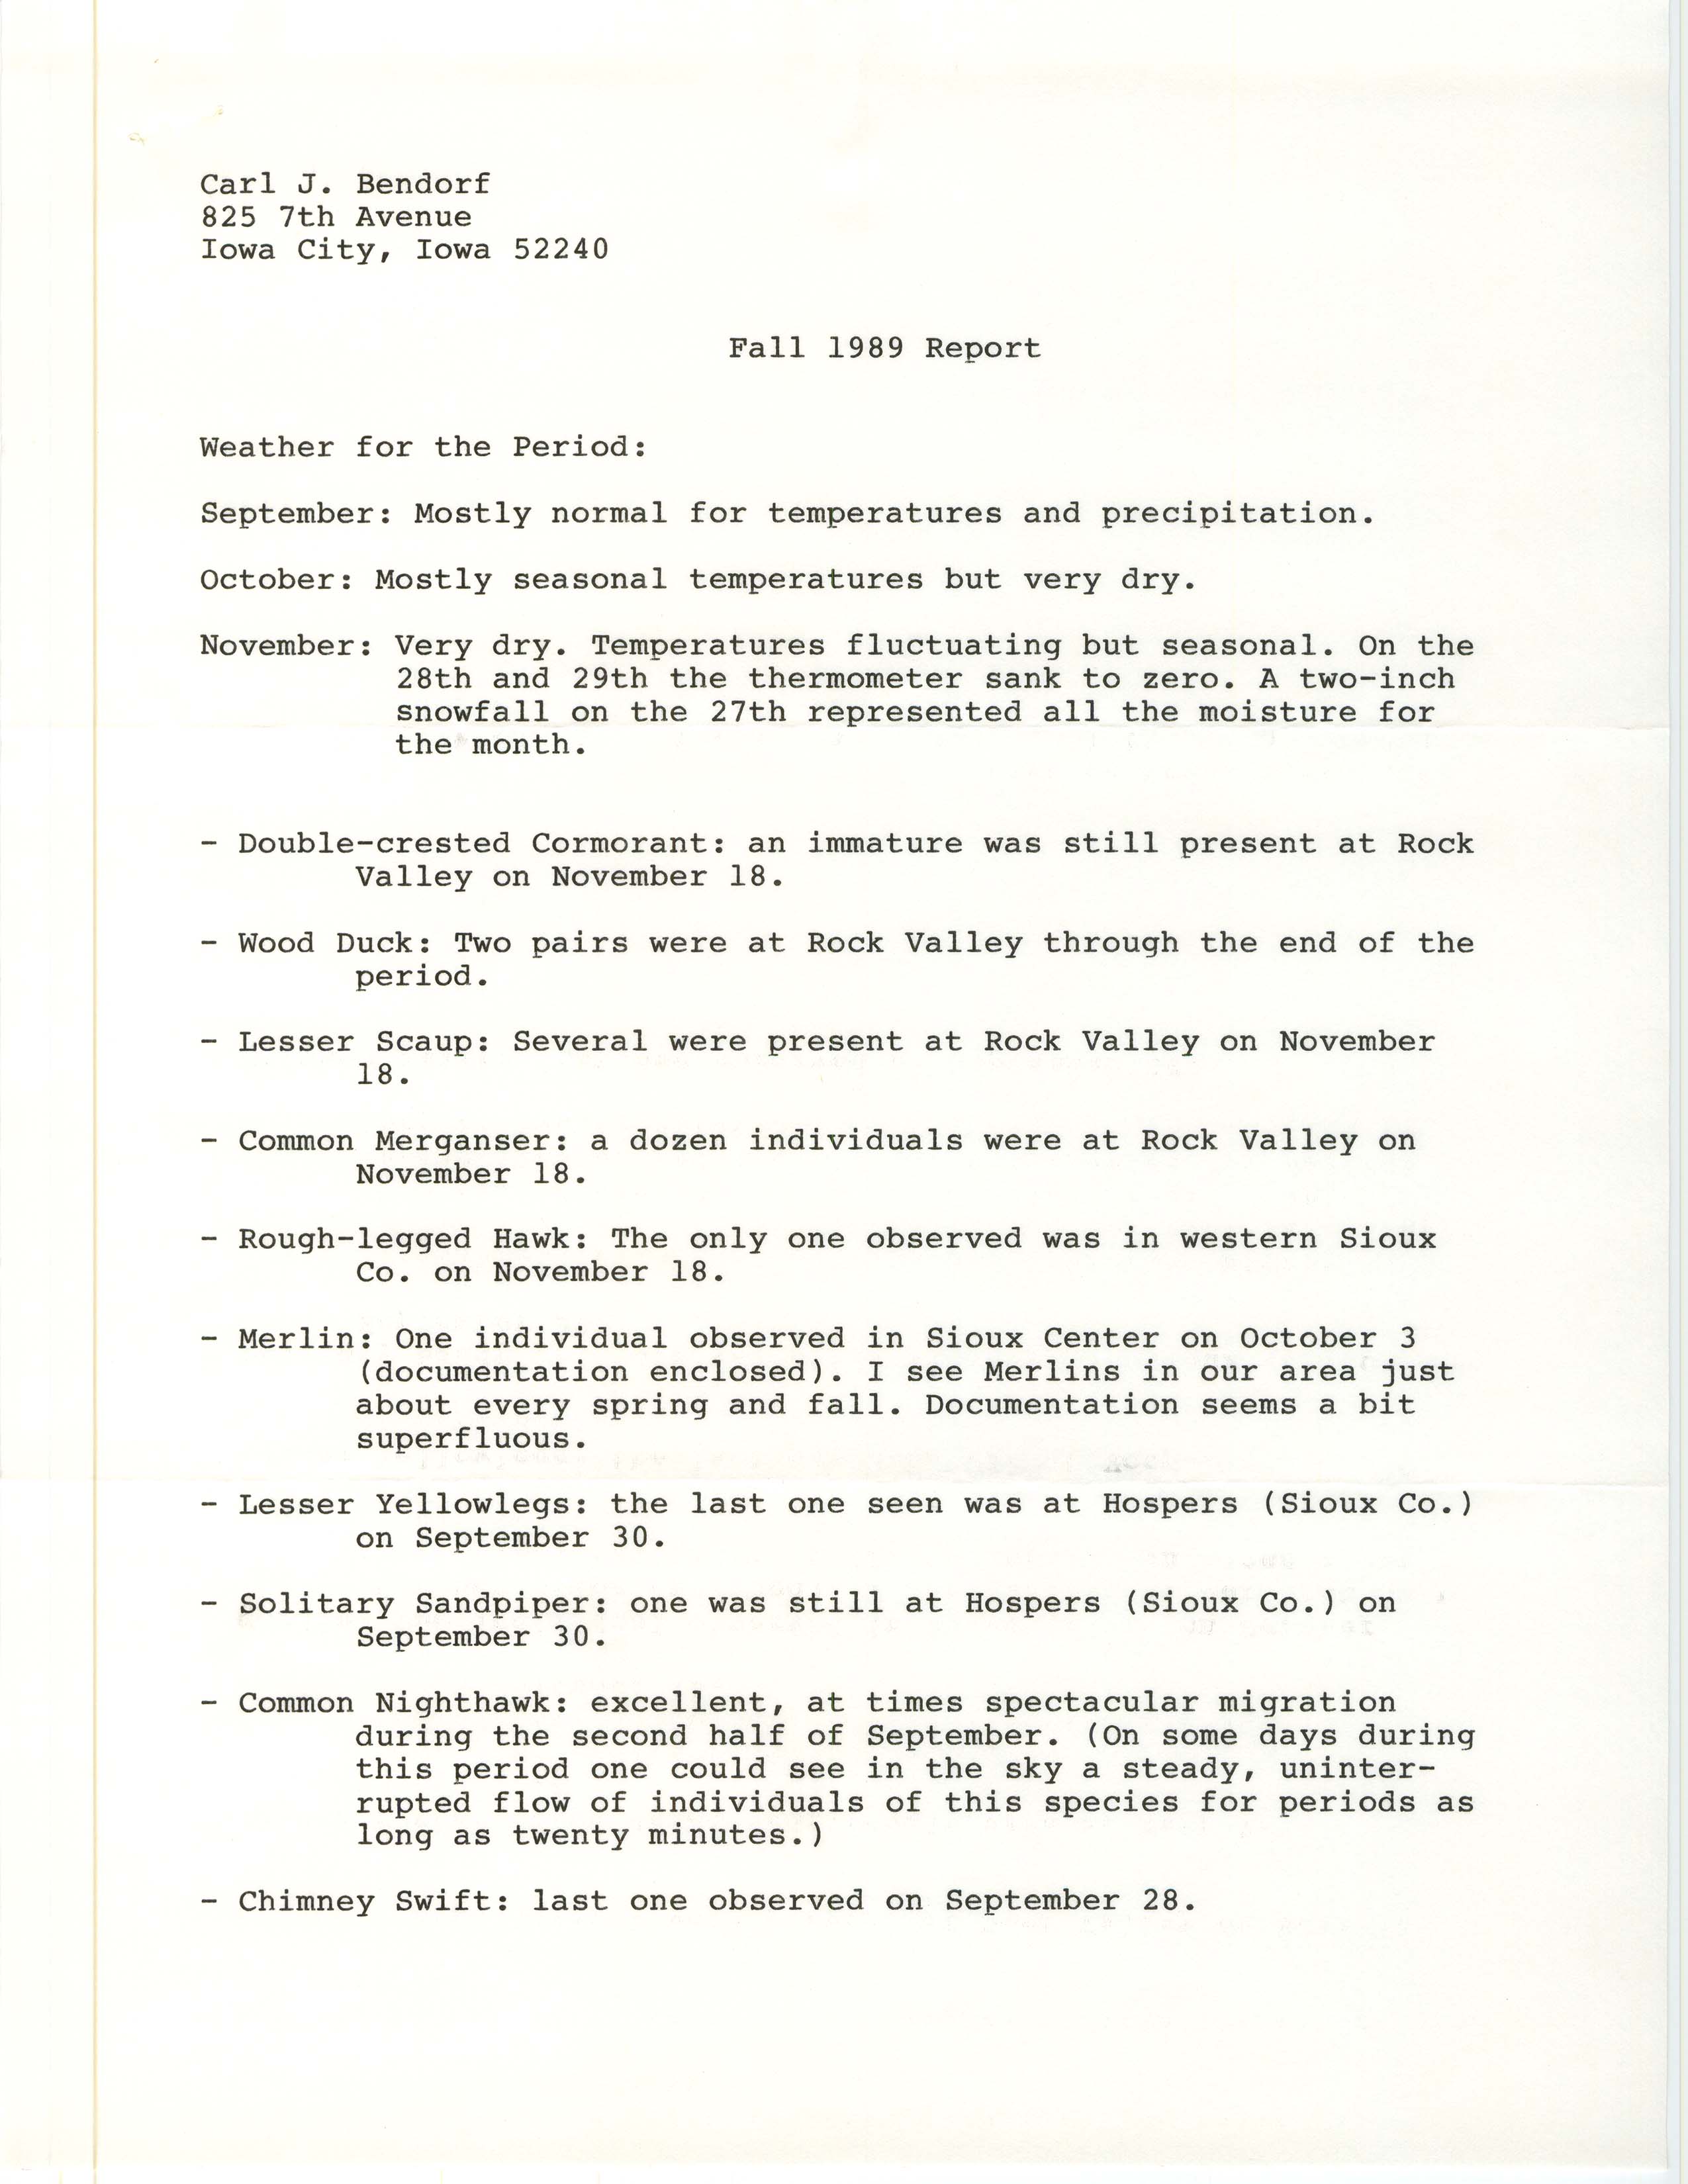 John Van Dyk letter to Carl J. Bendorf regarding field reports for the IOU quarterly field report, December 1, 1989